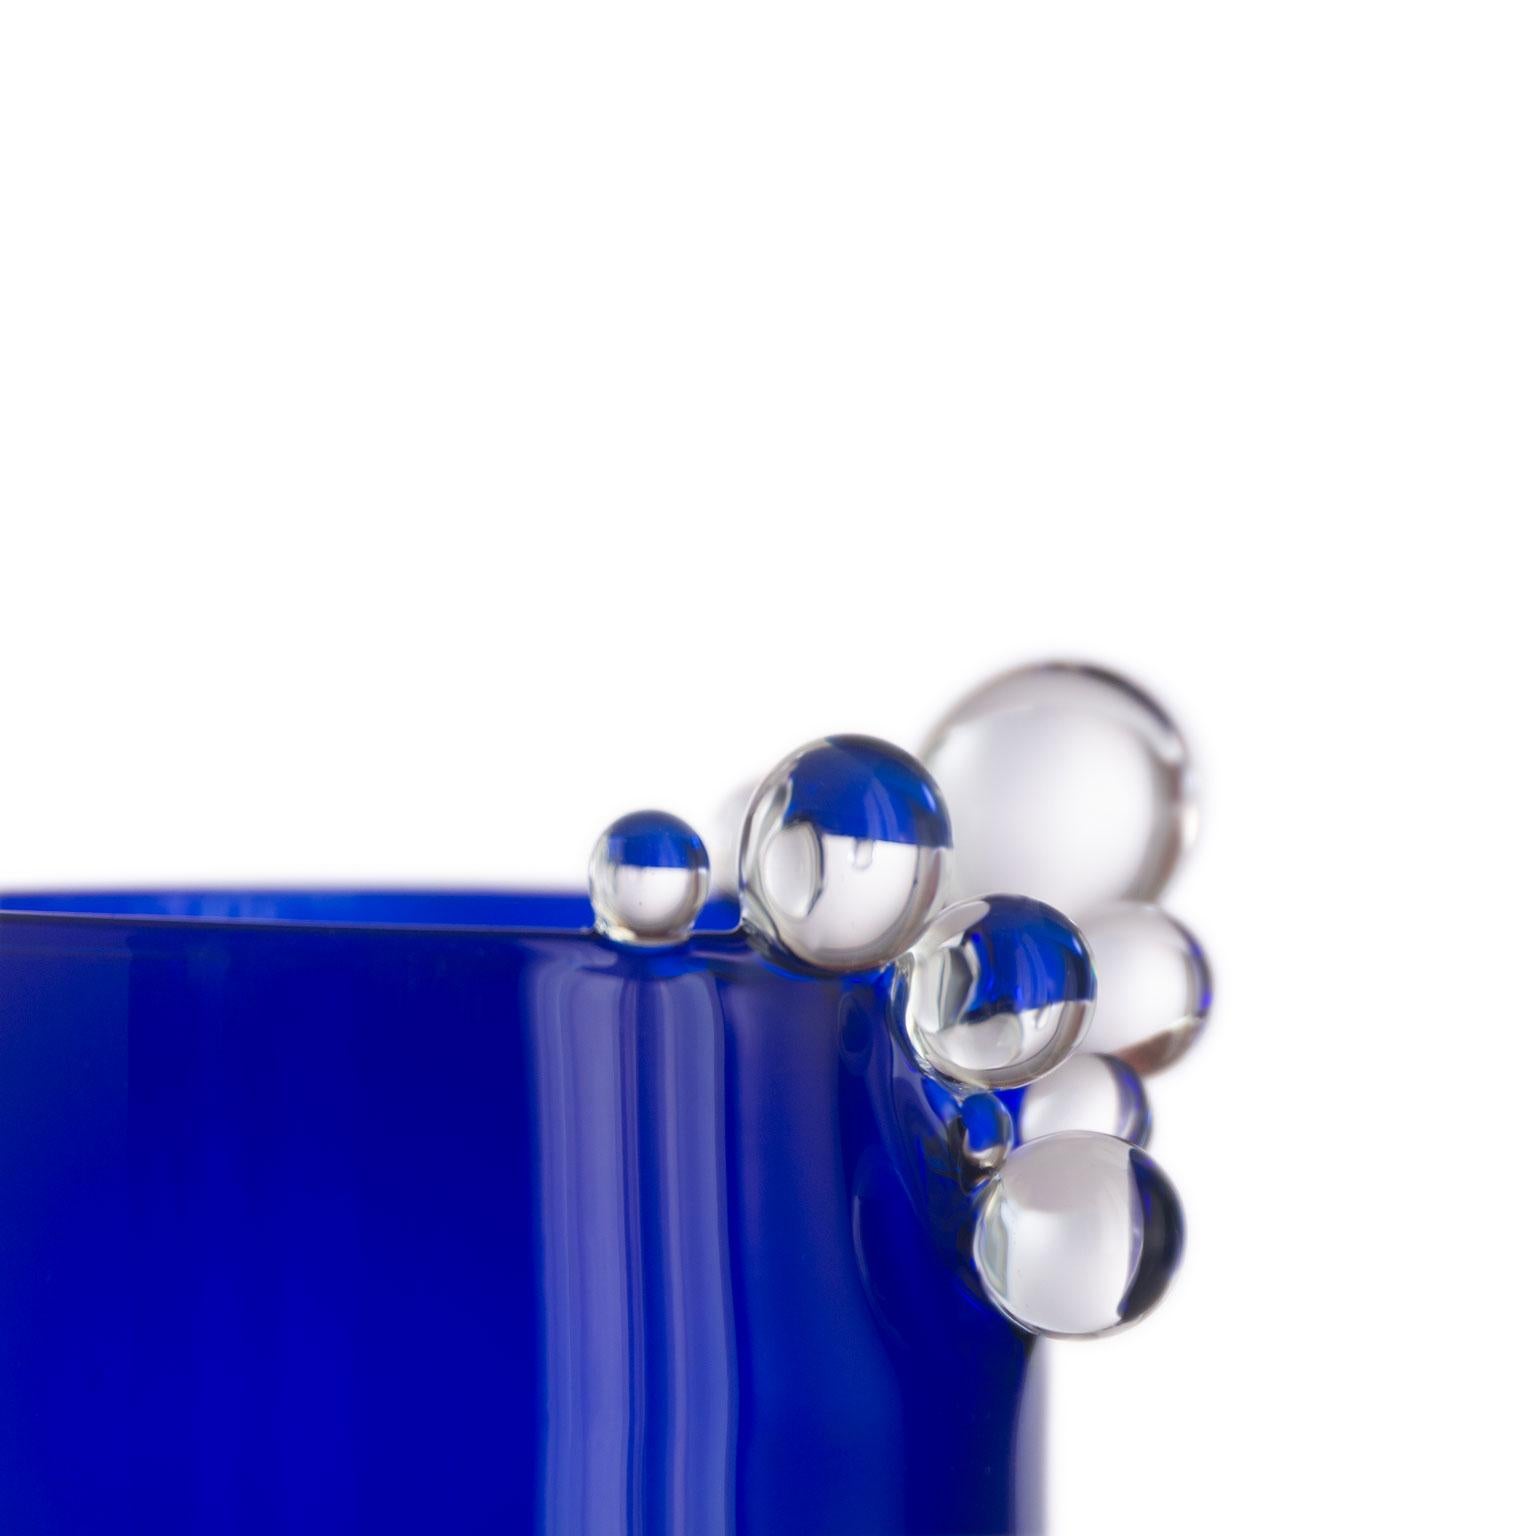 Hand Blown Glass Vase Bubble Kintsugi #Deep Blue 2023 by Simone Crestani

Bubble Kintsugi #Deep Blue

Artist: Simone Crestani
Material: Borosilicate glass
Technique: Flameworking
Unique piece
Year: 2023
Measures: Height 6.69'', width 3.93'', depth